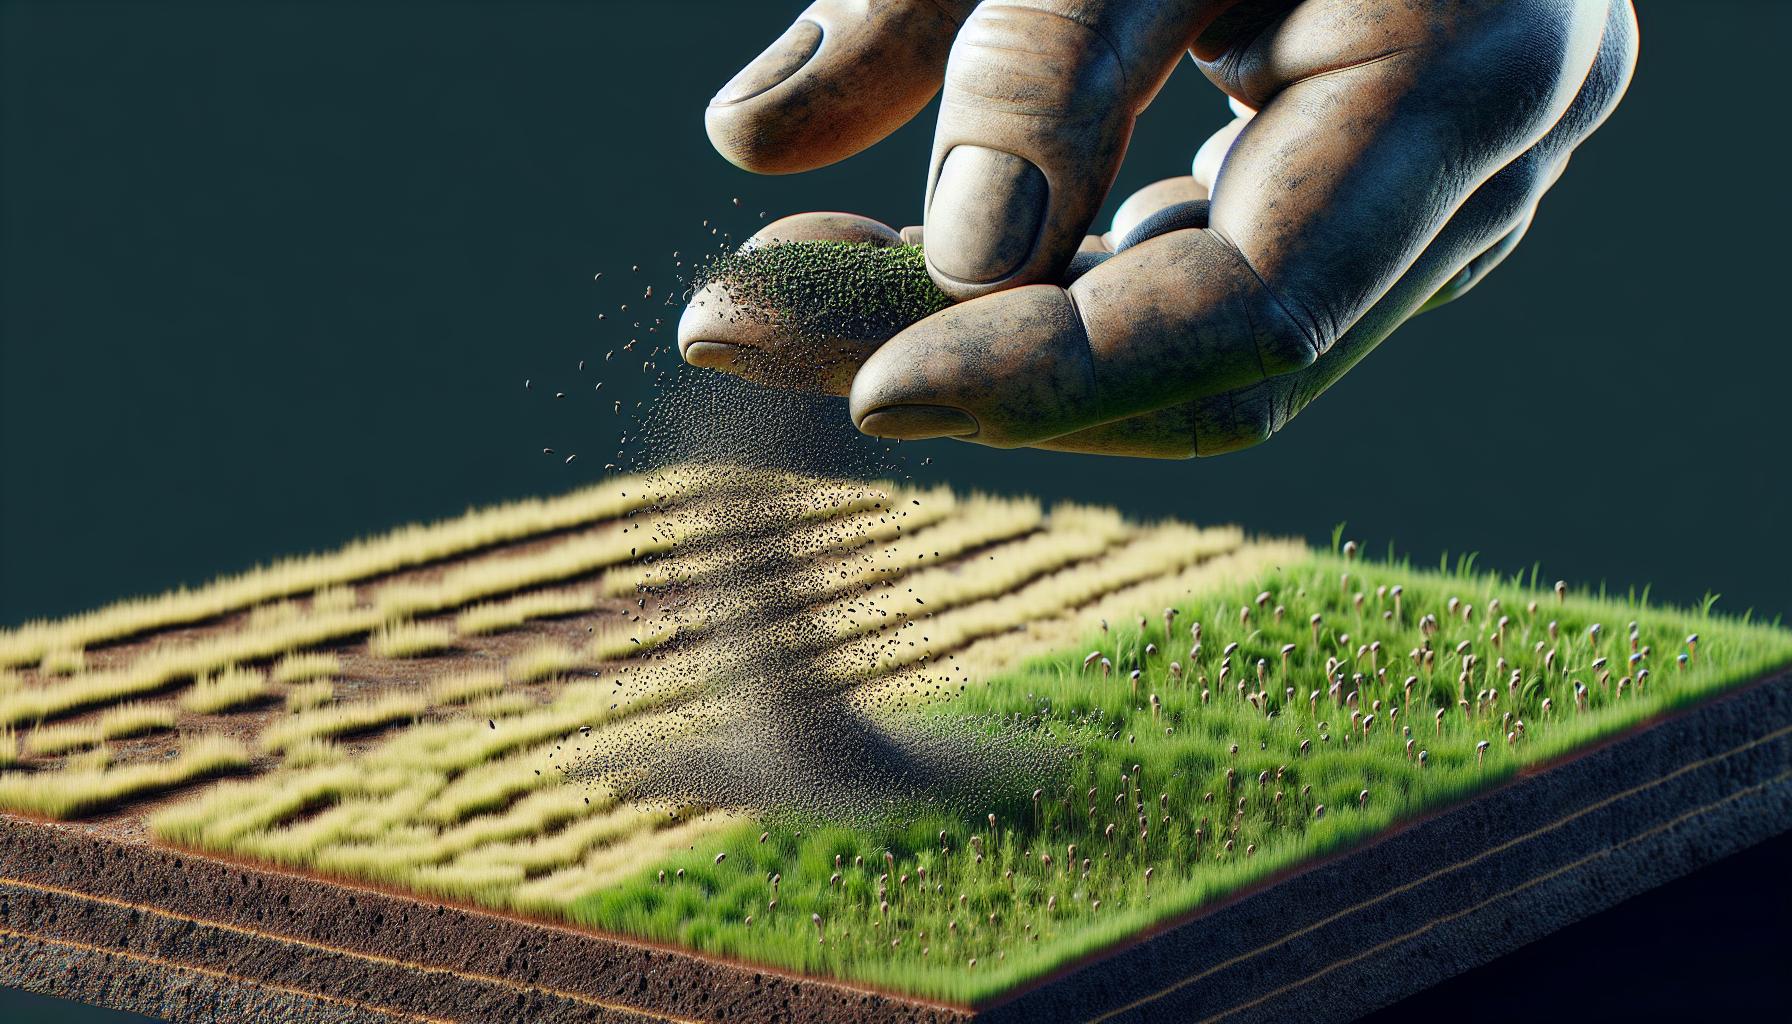 hand sprinkling sand on grass terrain